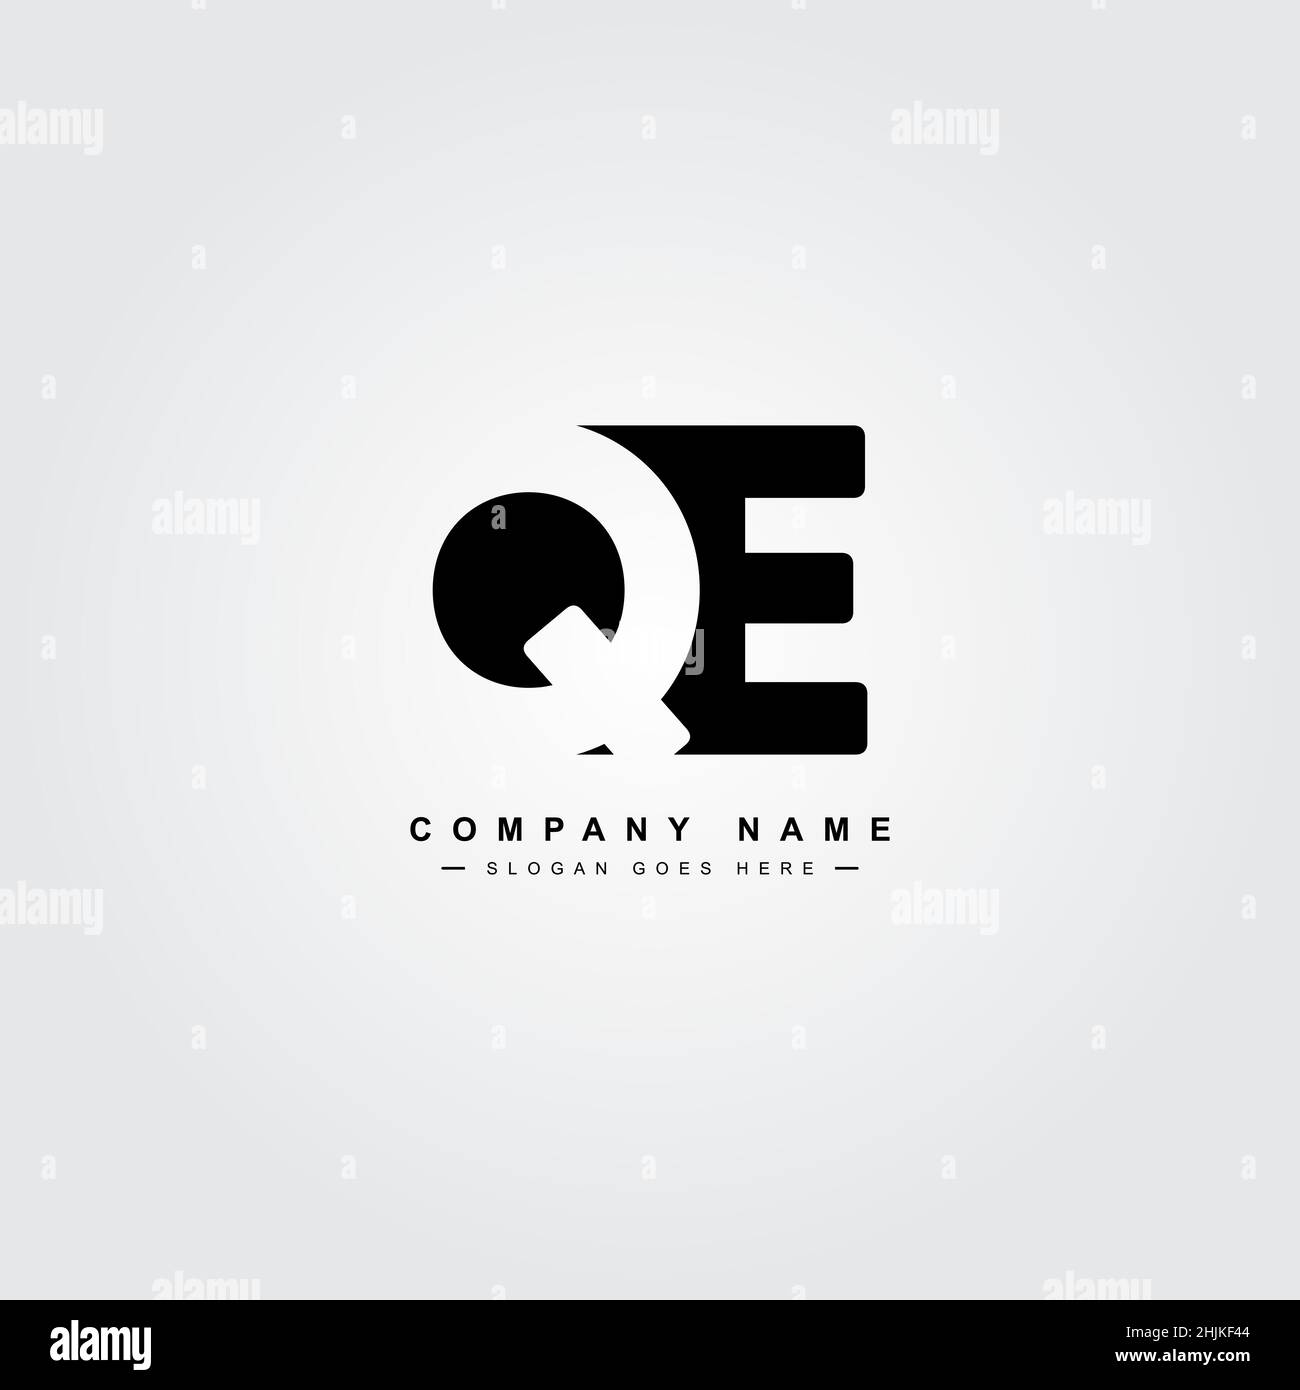 Minimal Business logo for Alphabet QE - Initial Letter Q and E Logo - Monogram Vector Logo Template for Business Name Initials Stock Vector